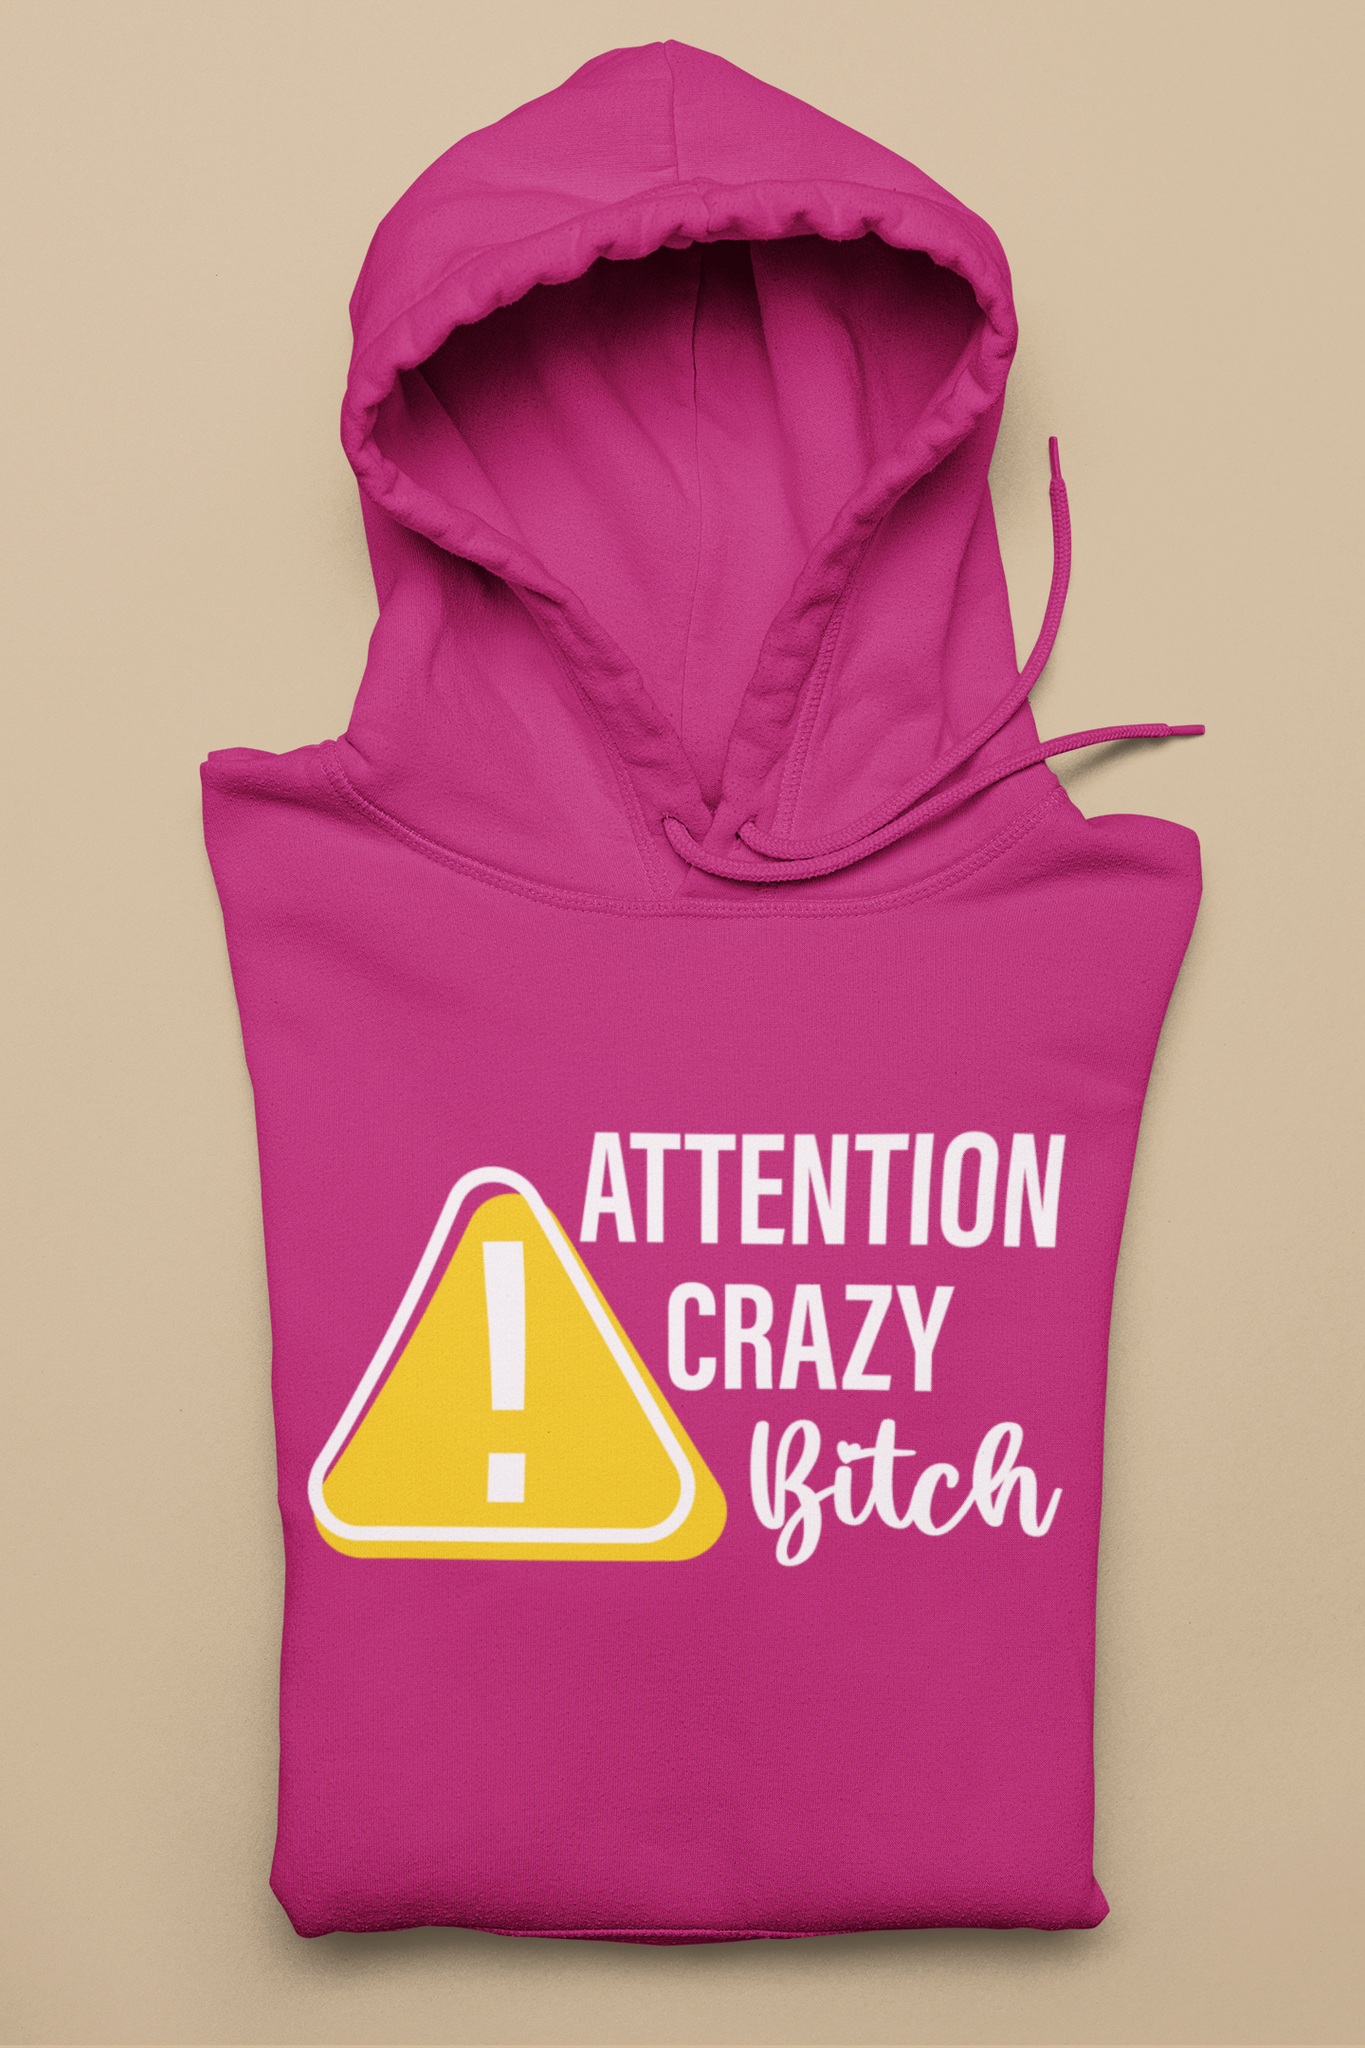 Kangourou - Attention crazy bitch